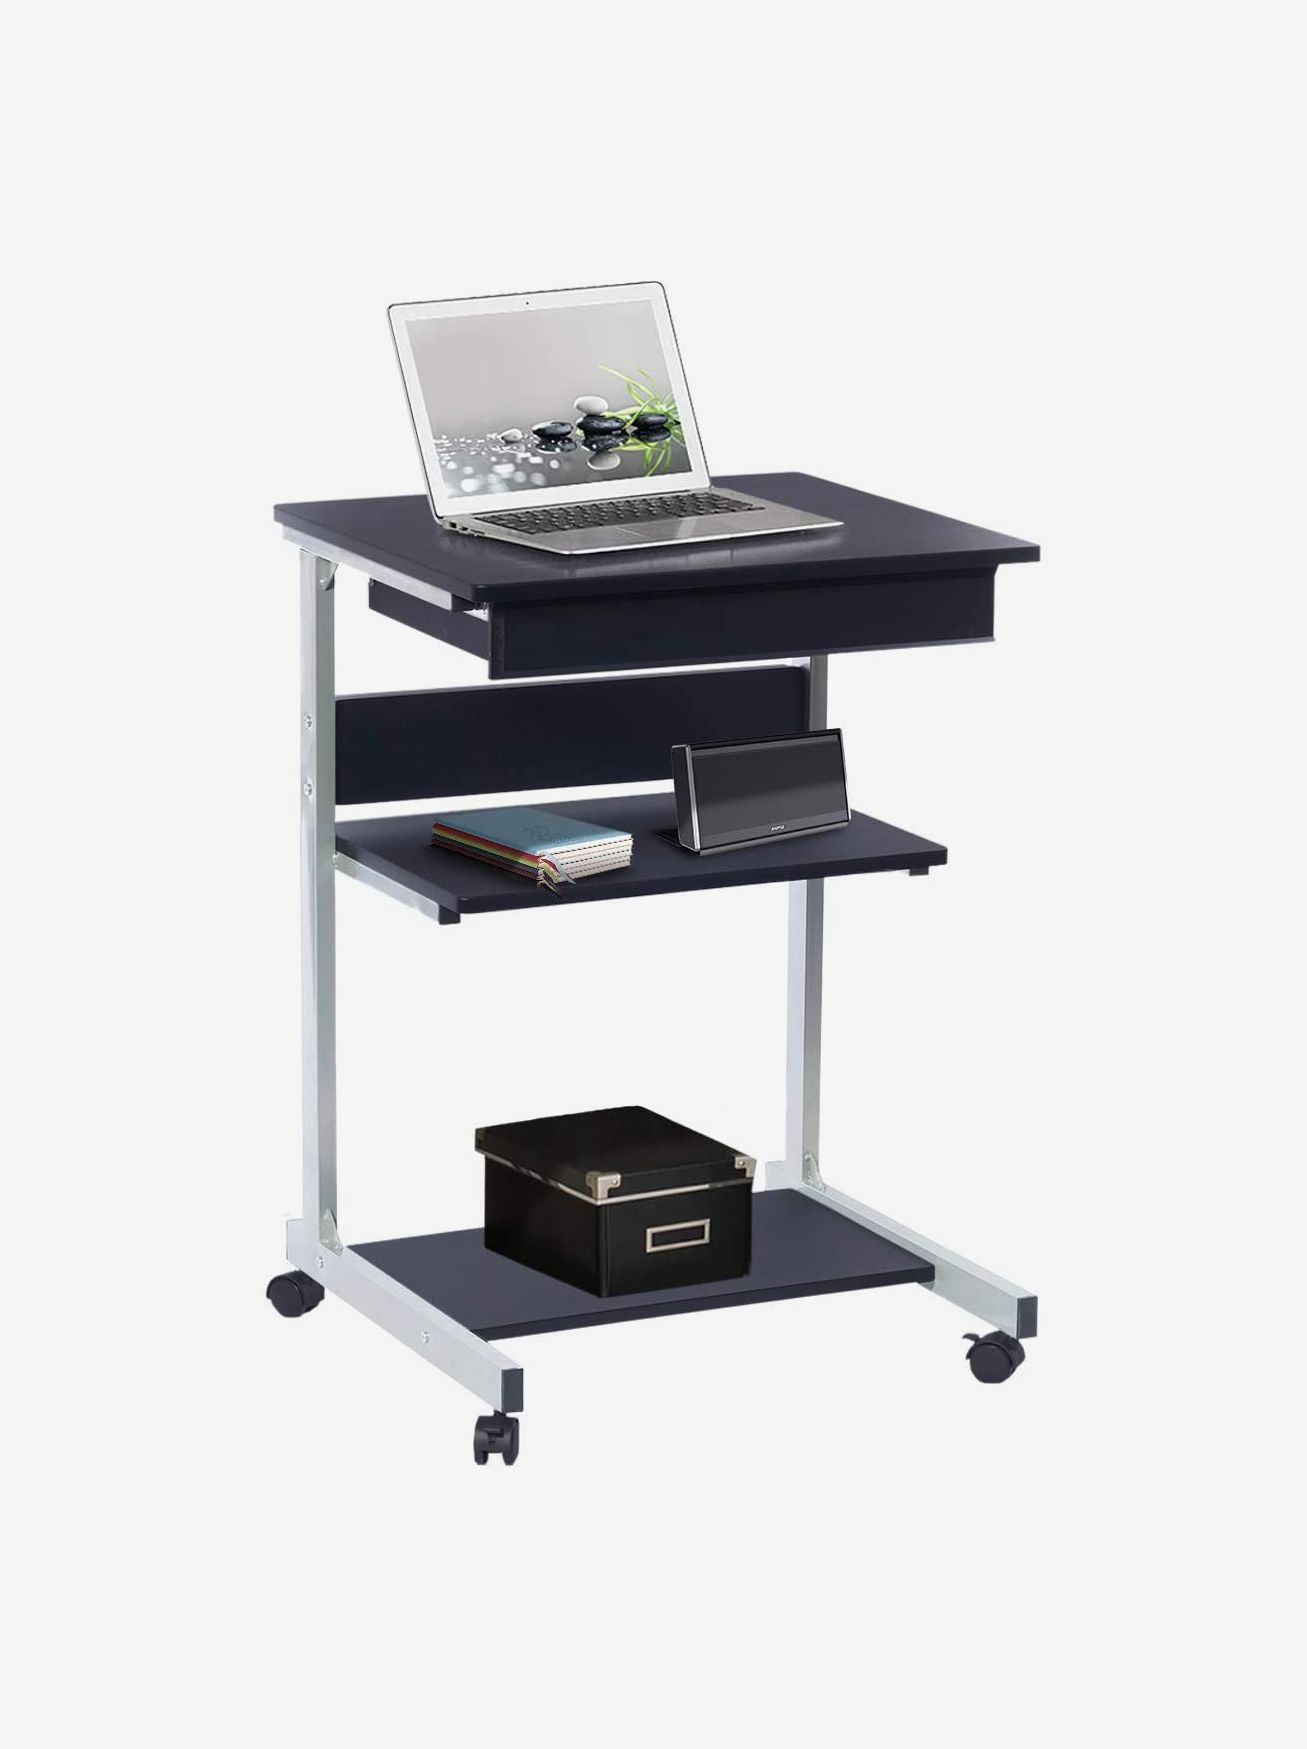 Portable Folding Laptop Desk Computer Table Adjustable Stand For Bed Black&White 